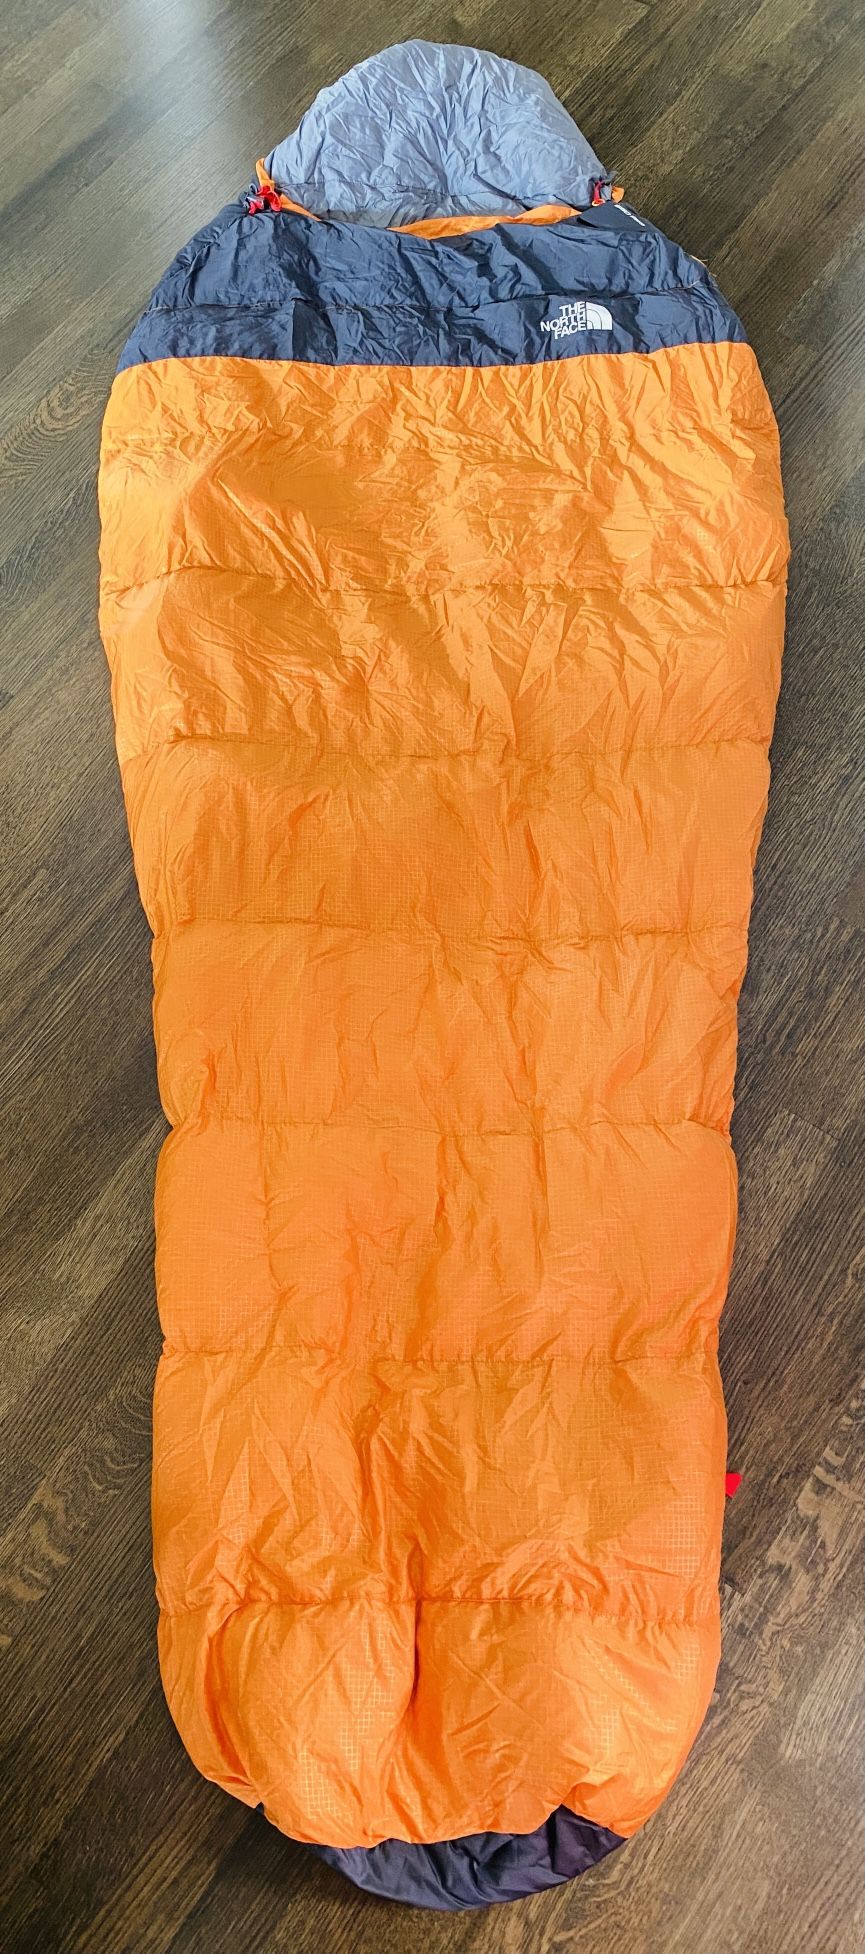 North Face Furnace 550 down sleeping bag